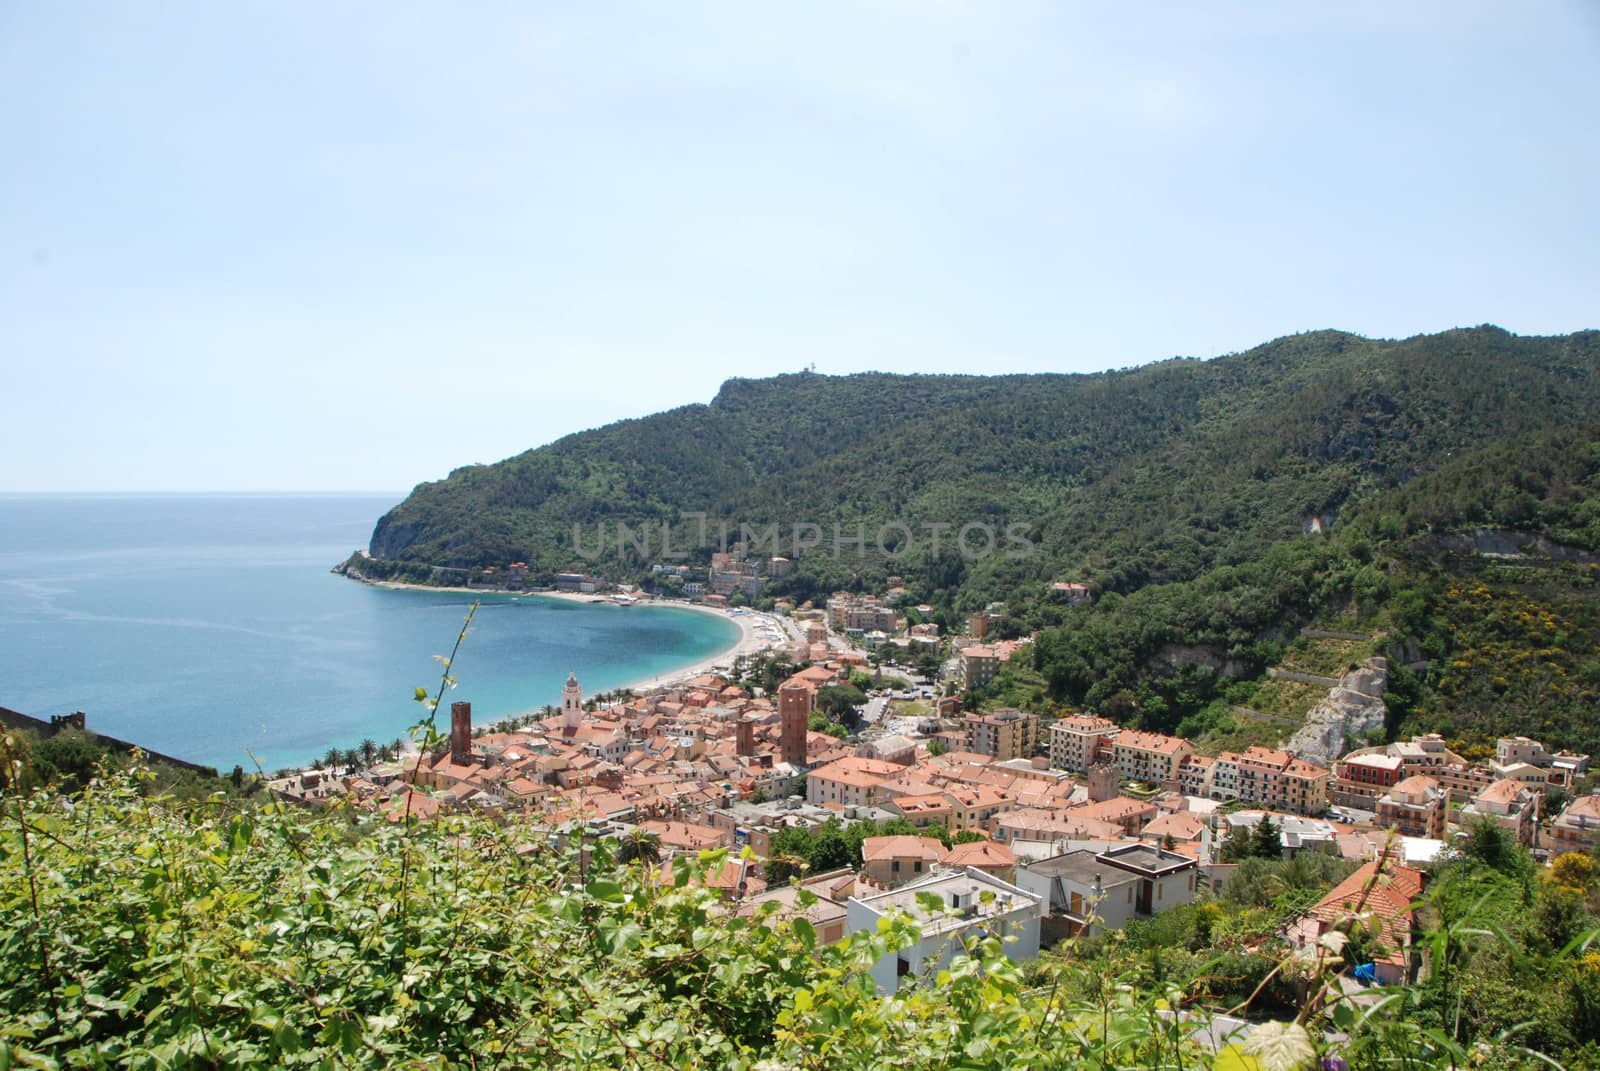 View of Noli, Liguria - Italy